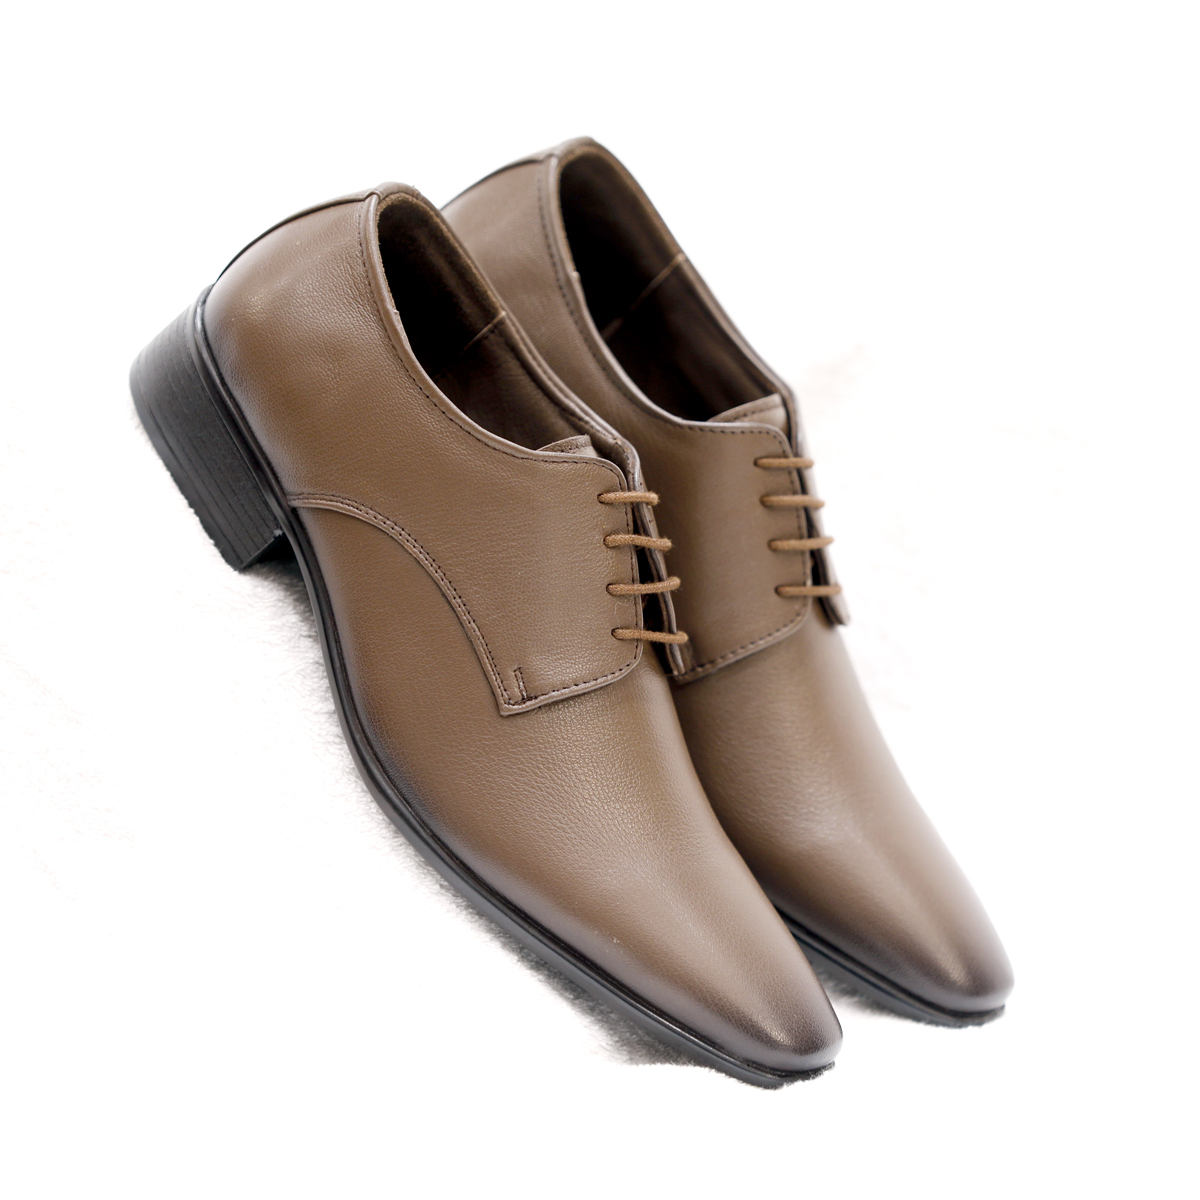 Debackers Mens Formal Shoe 9405